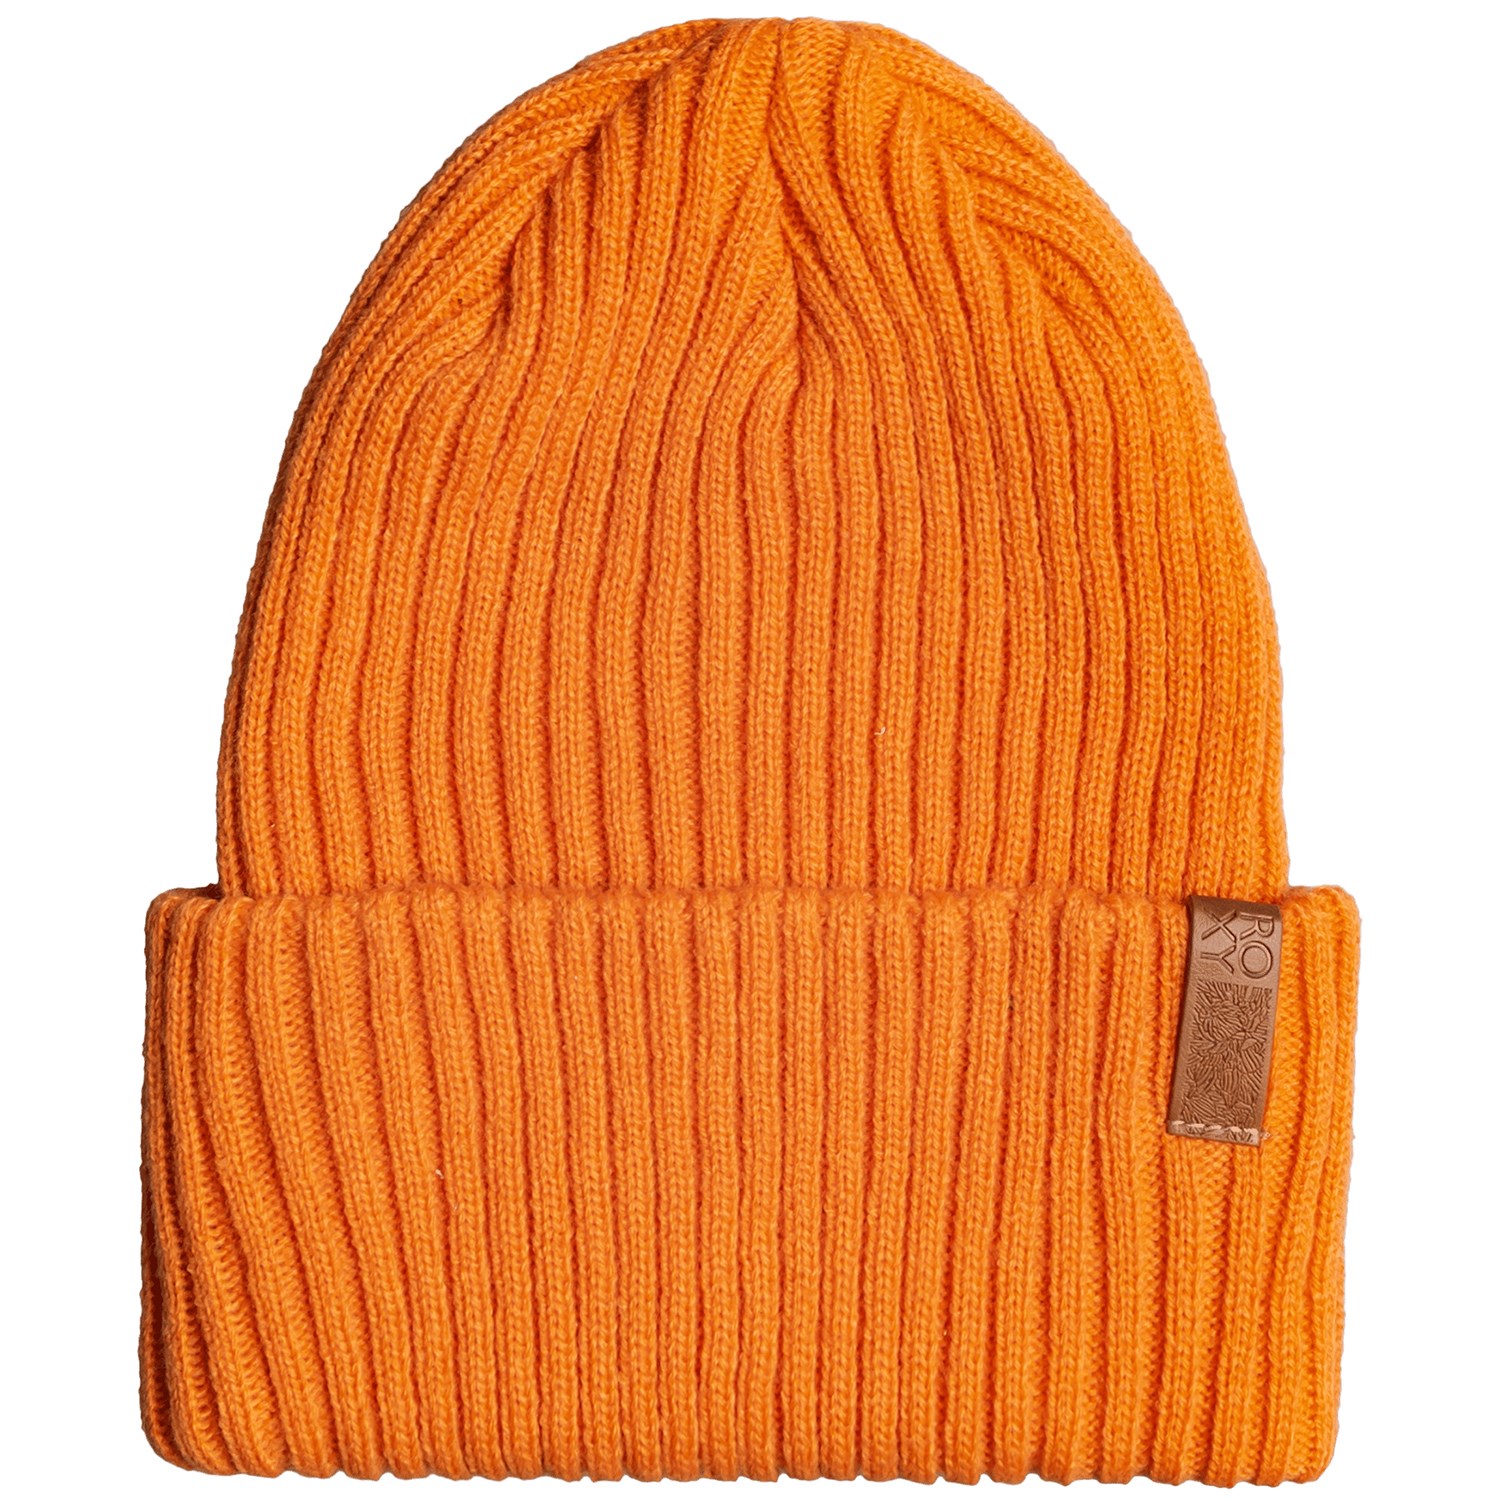 Шапка - Бини Roxy Dynabeat женская, оранжевый шапка бини roxy dynabeat цвет оранжевый размер one size